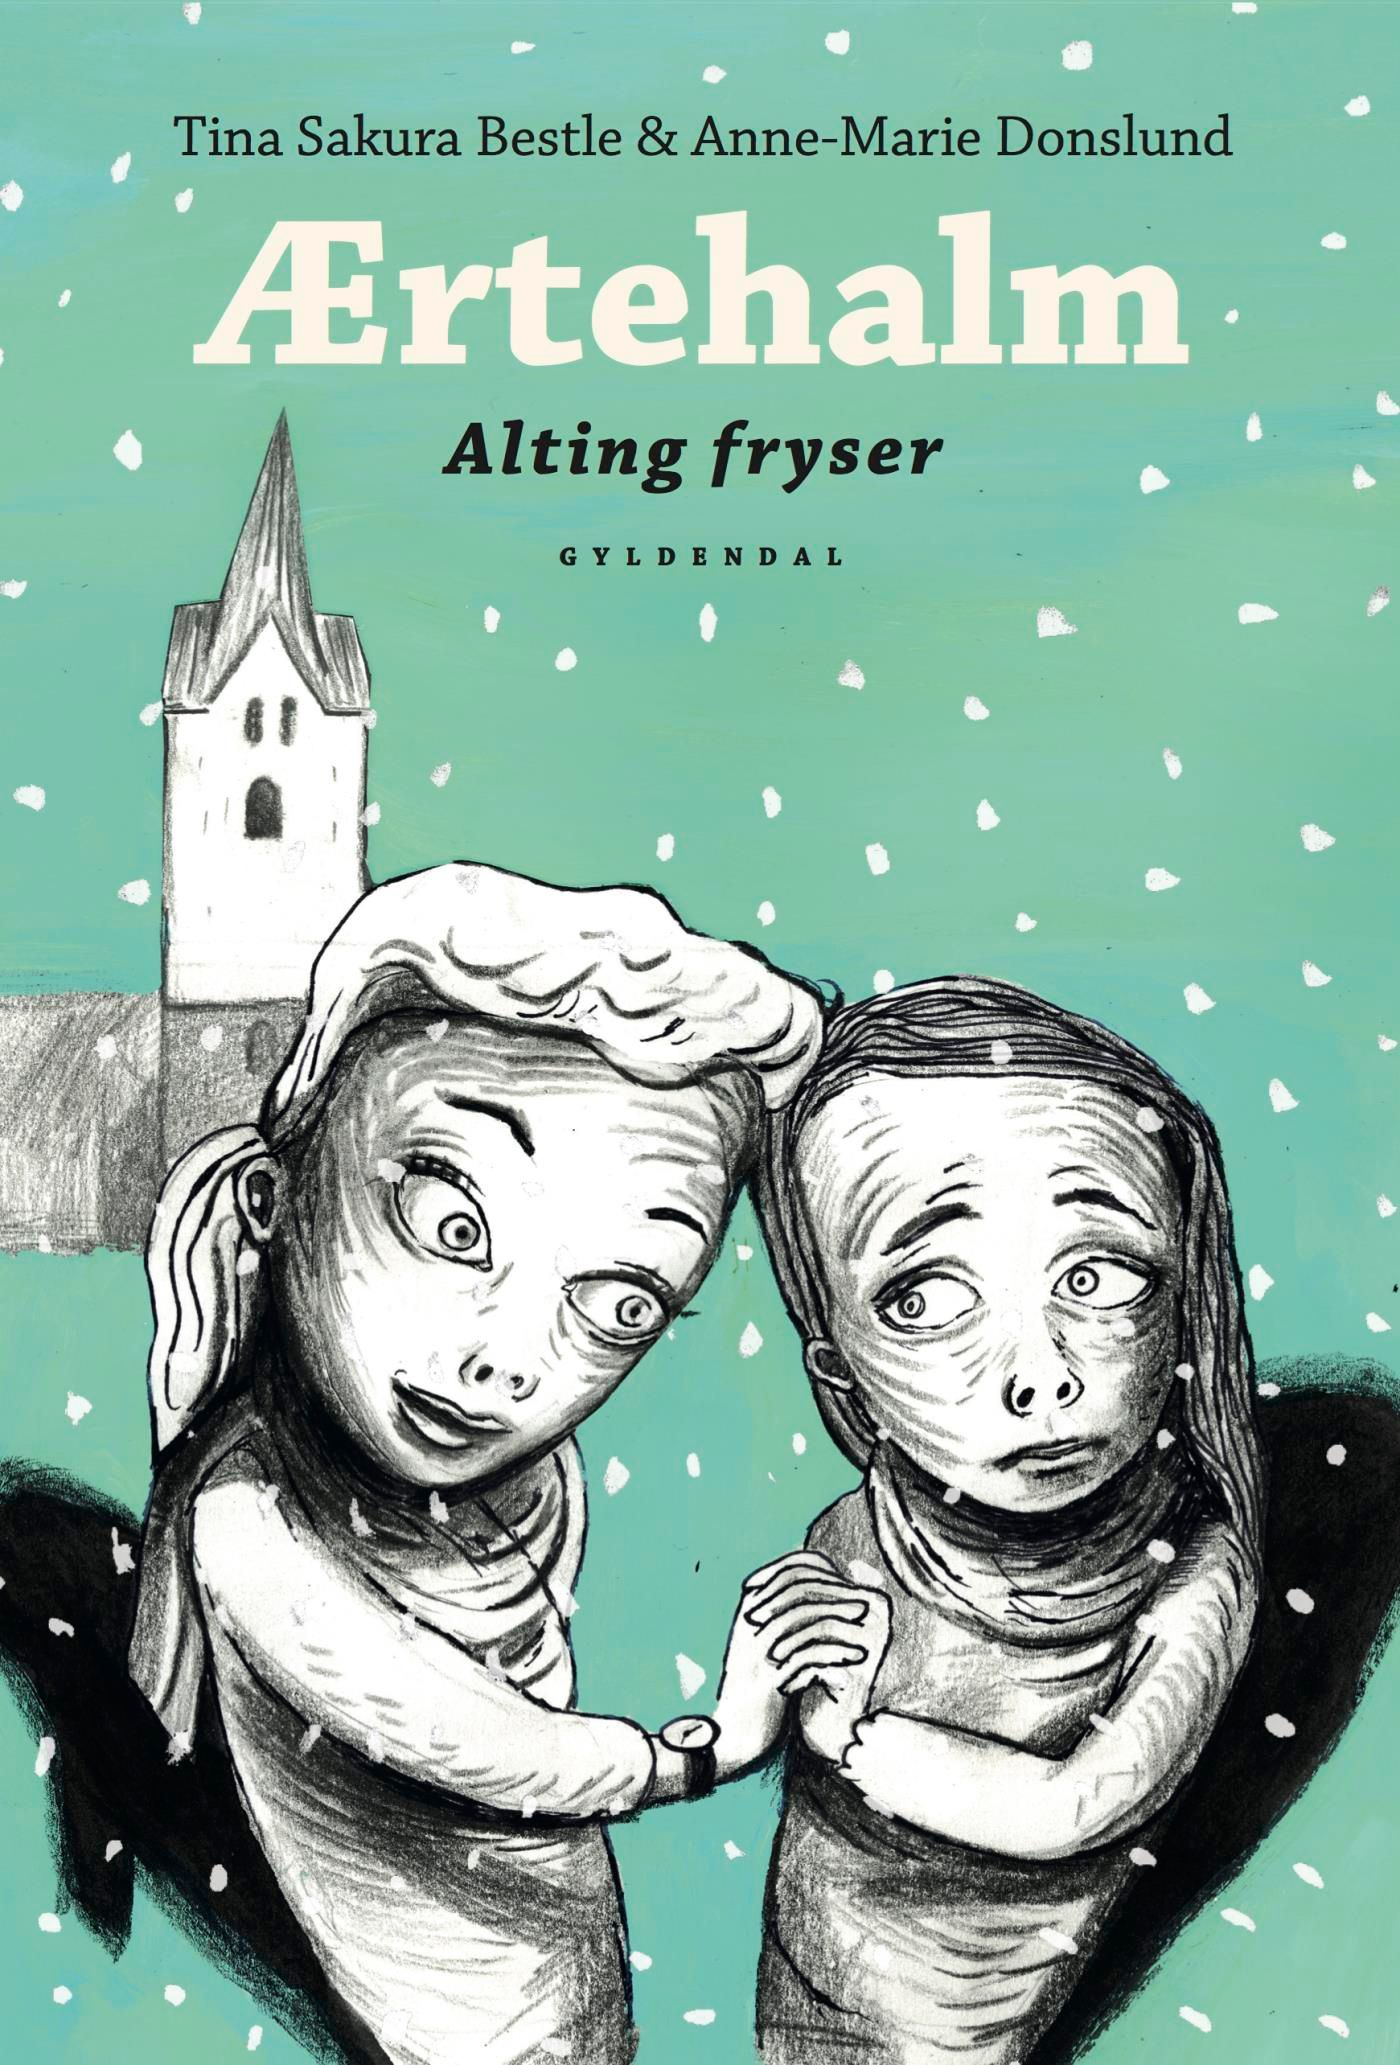 Ærtehalm 3 - Alting fryser, e-bog af Anne-Marie Donslund, Tina Sakura Bestle